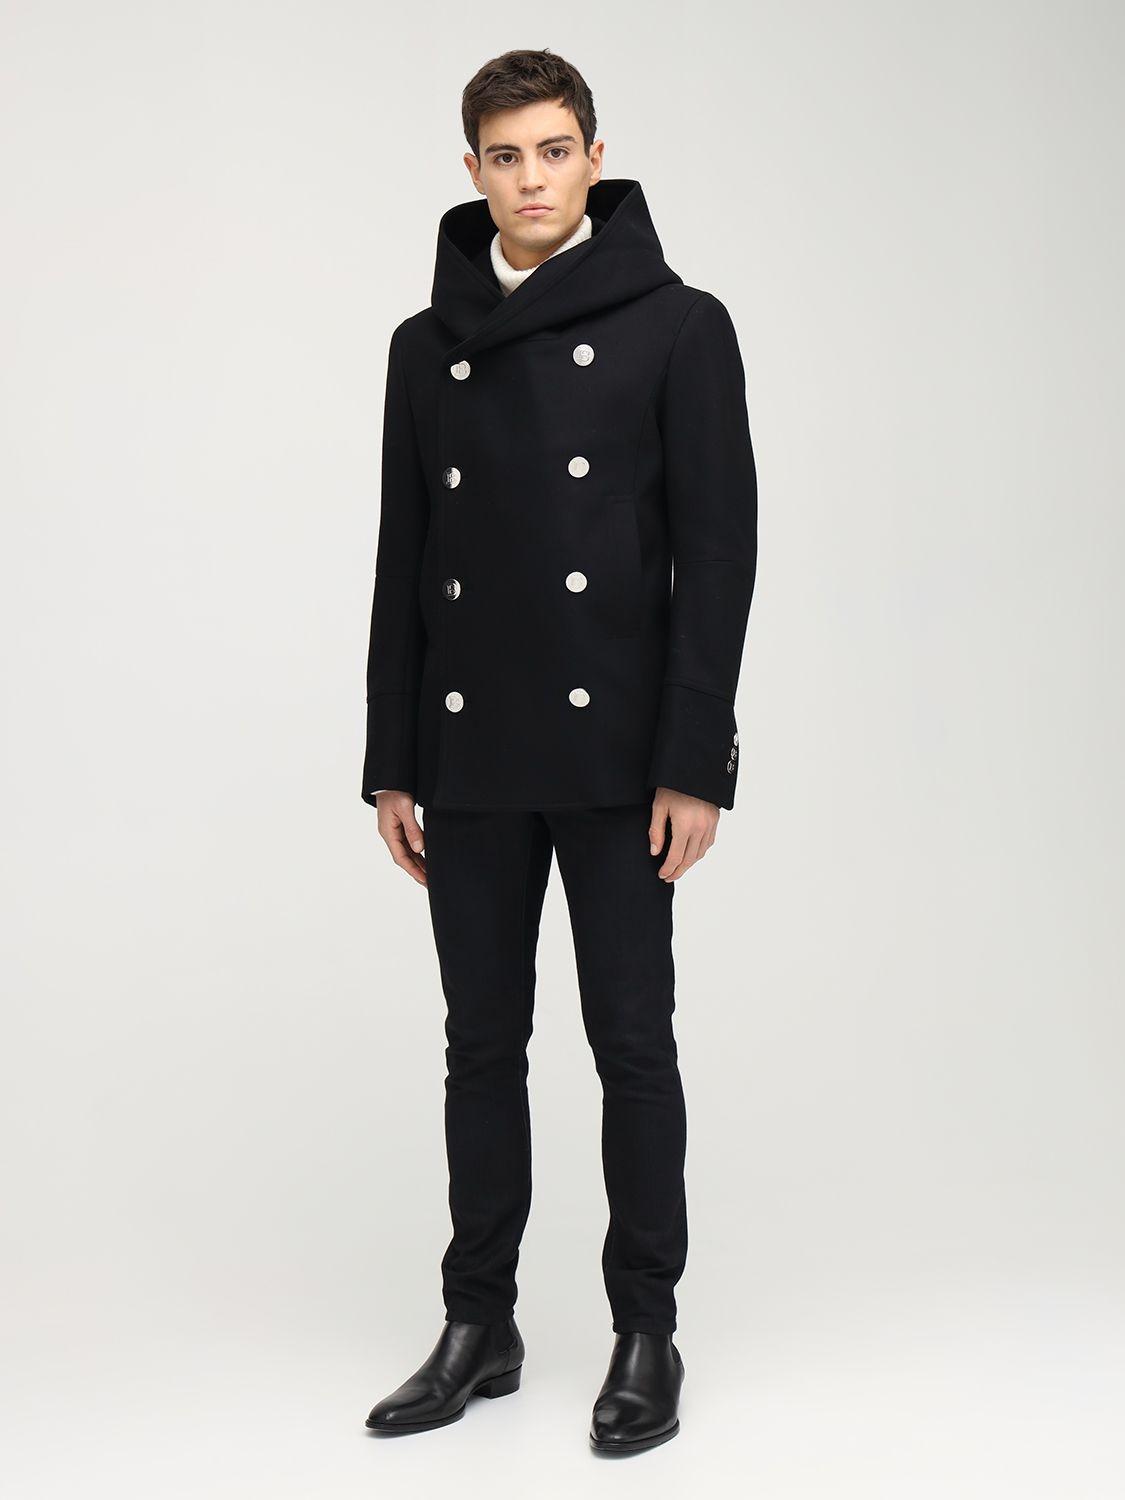 Balmain Hooded Wool Pea Coat in Black for Men | Lyst